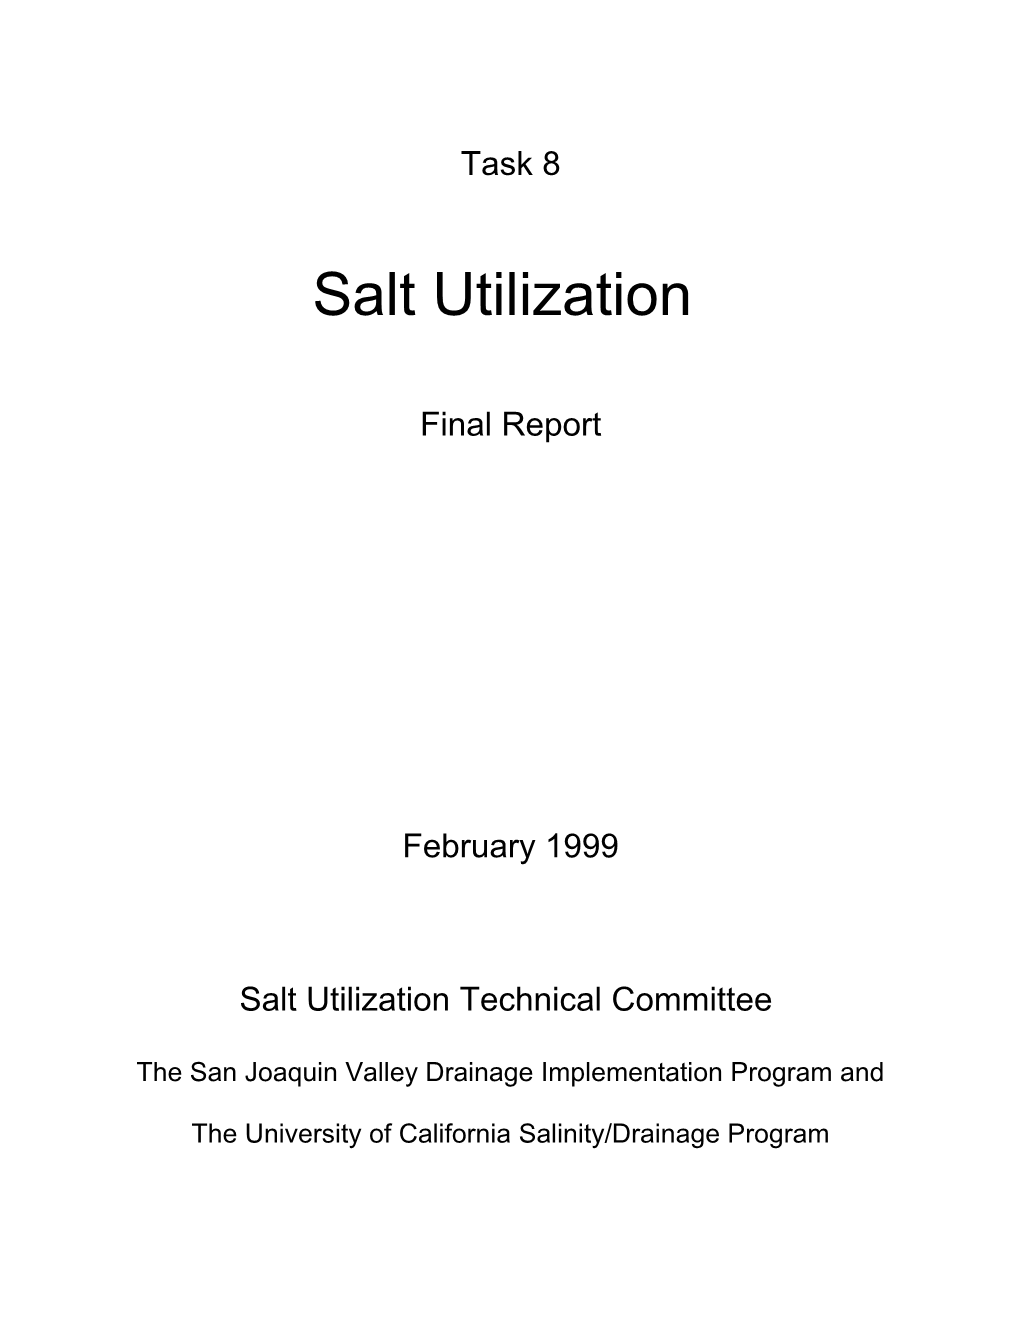 Report For The Salt Utilization Technical